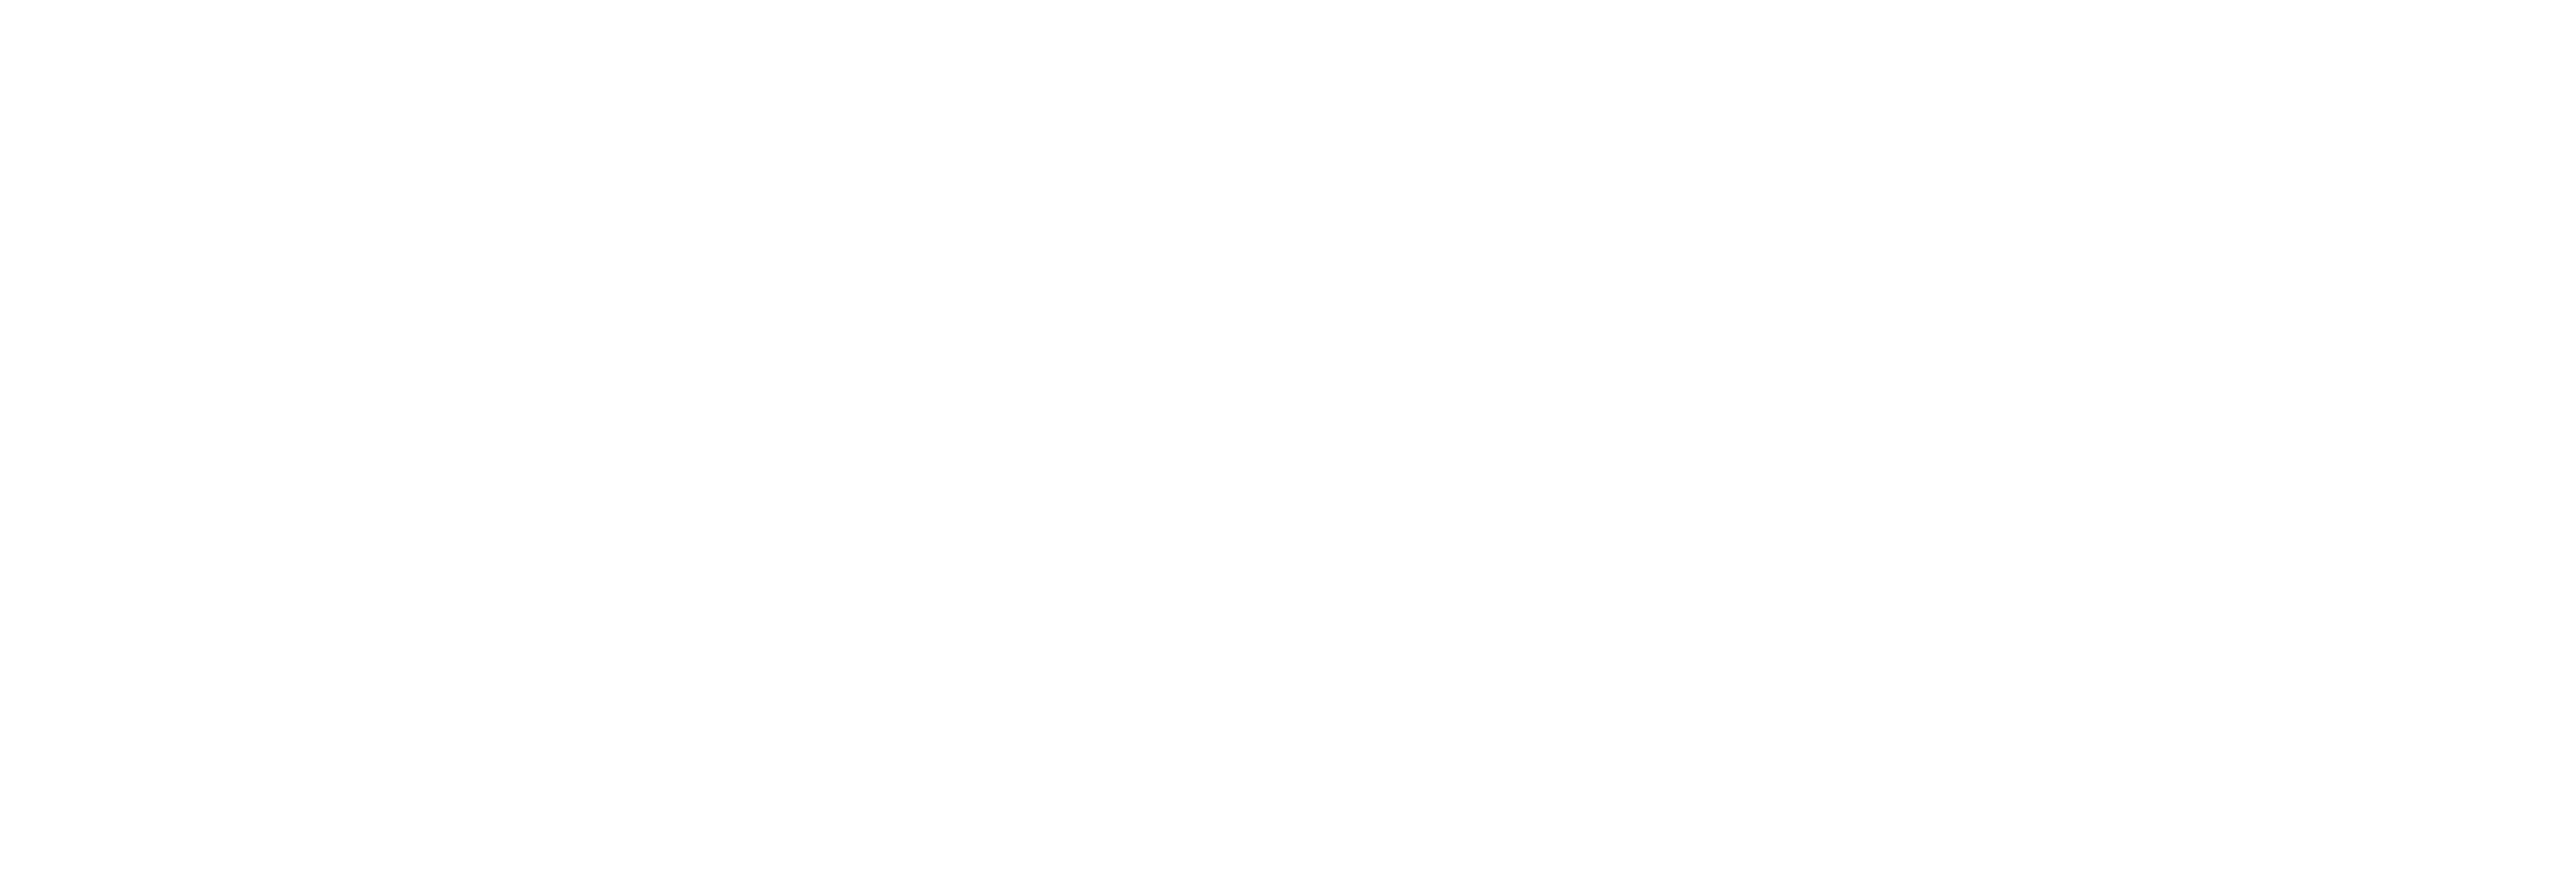 AniCura Läckeby Djurklinik logo